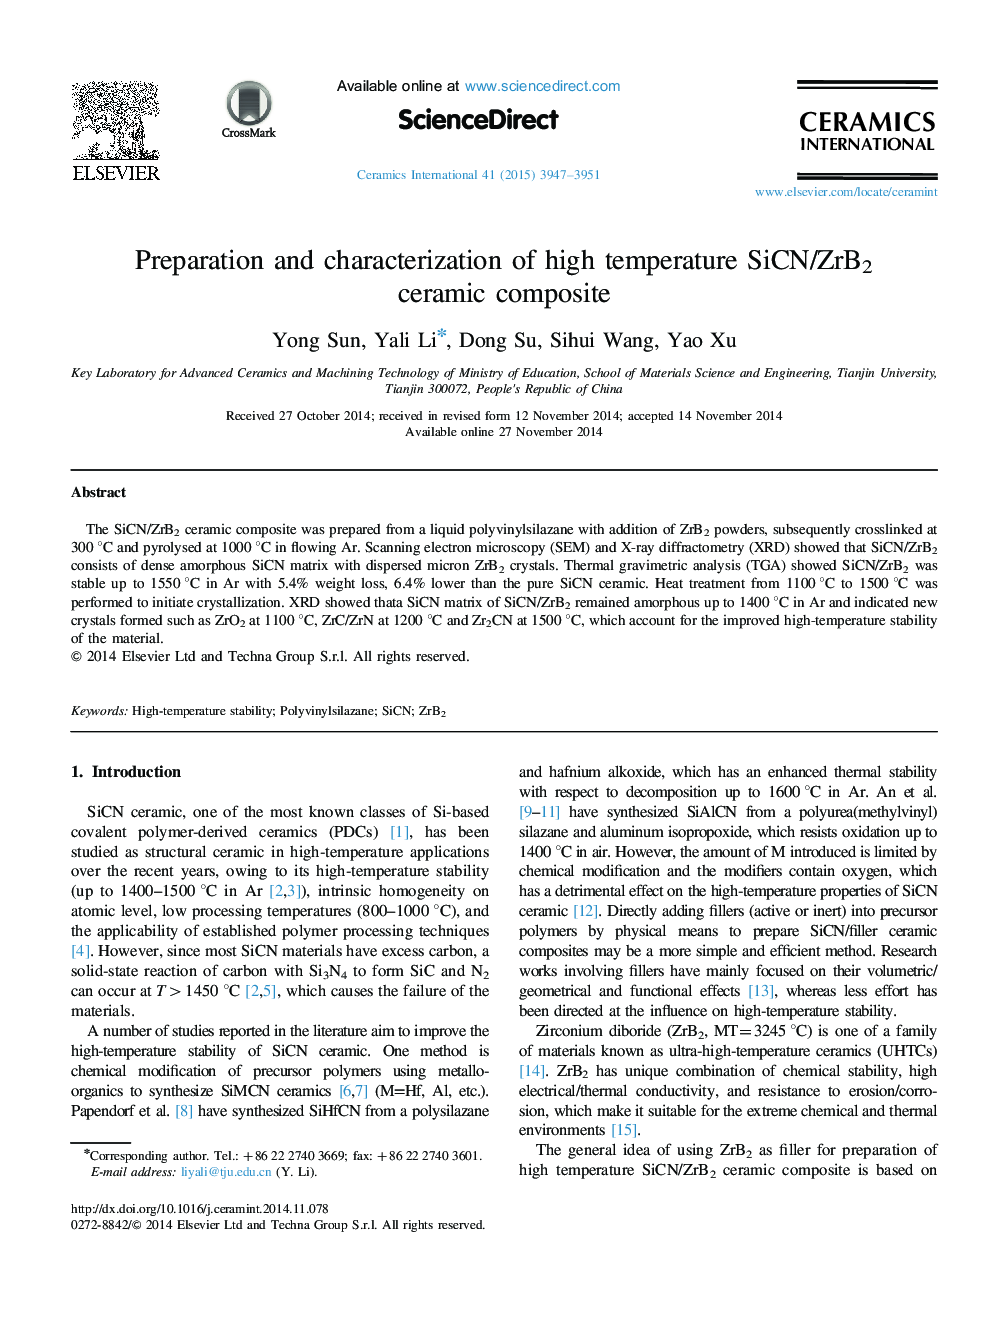 Preparation and characterization of high temperature SiCN/ZrB2 ceramic composite